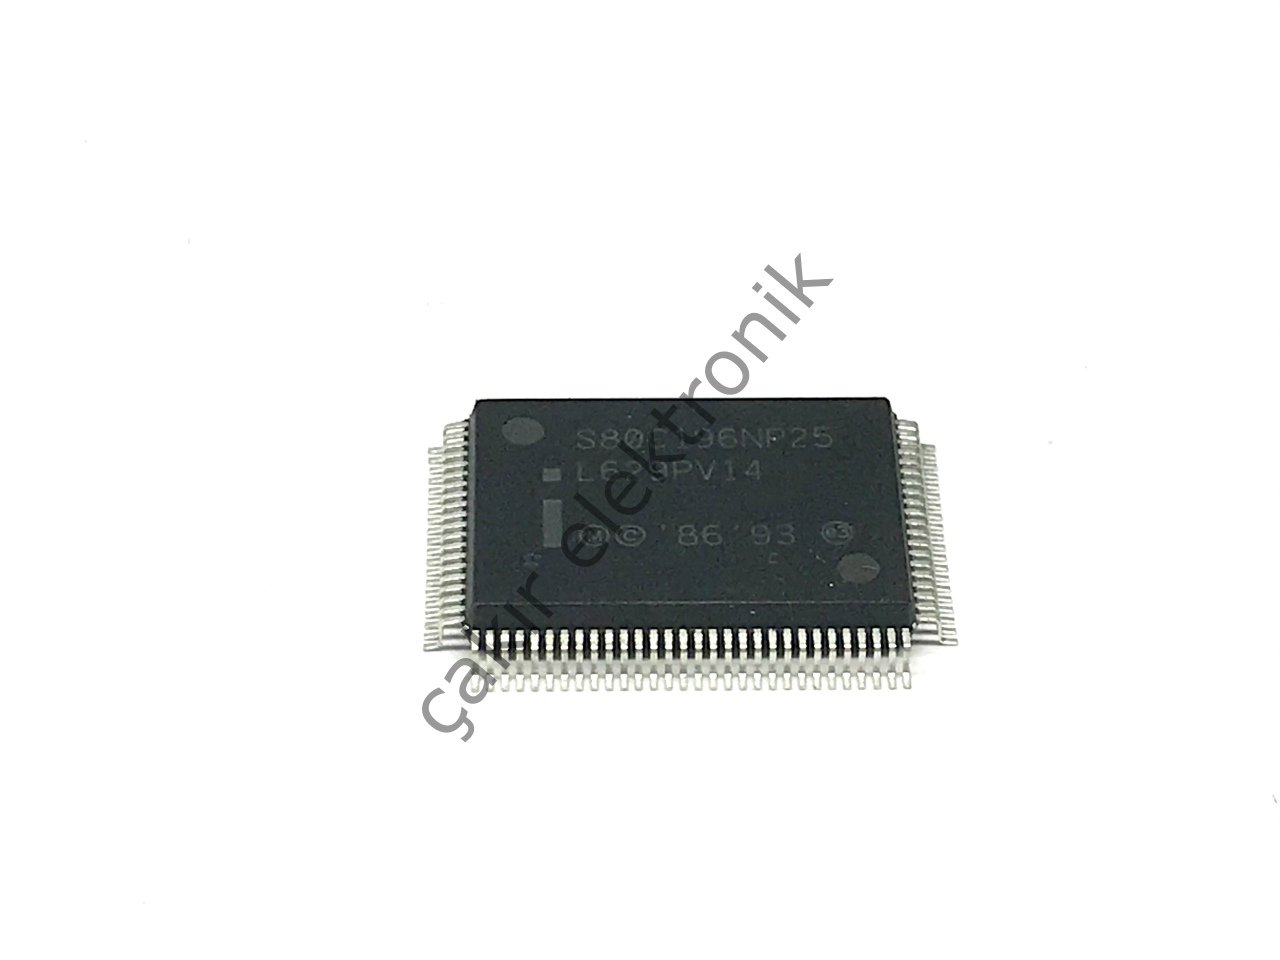 S80C196NP25  , 80C196 , CHMOS 16-bit microcontroller. 25 MHz, 4.5 - 5.5 V